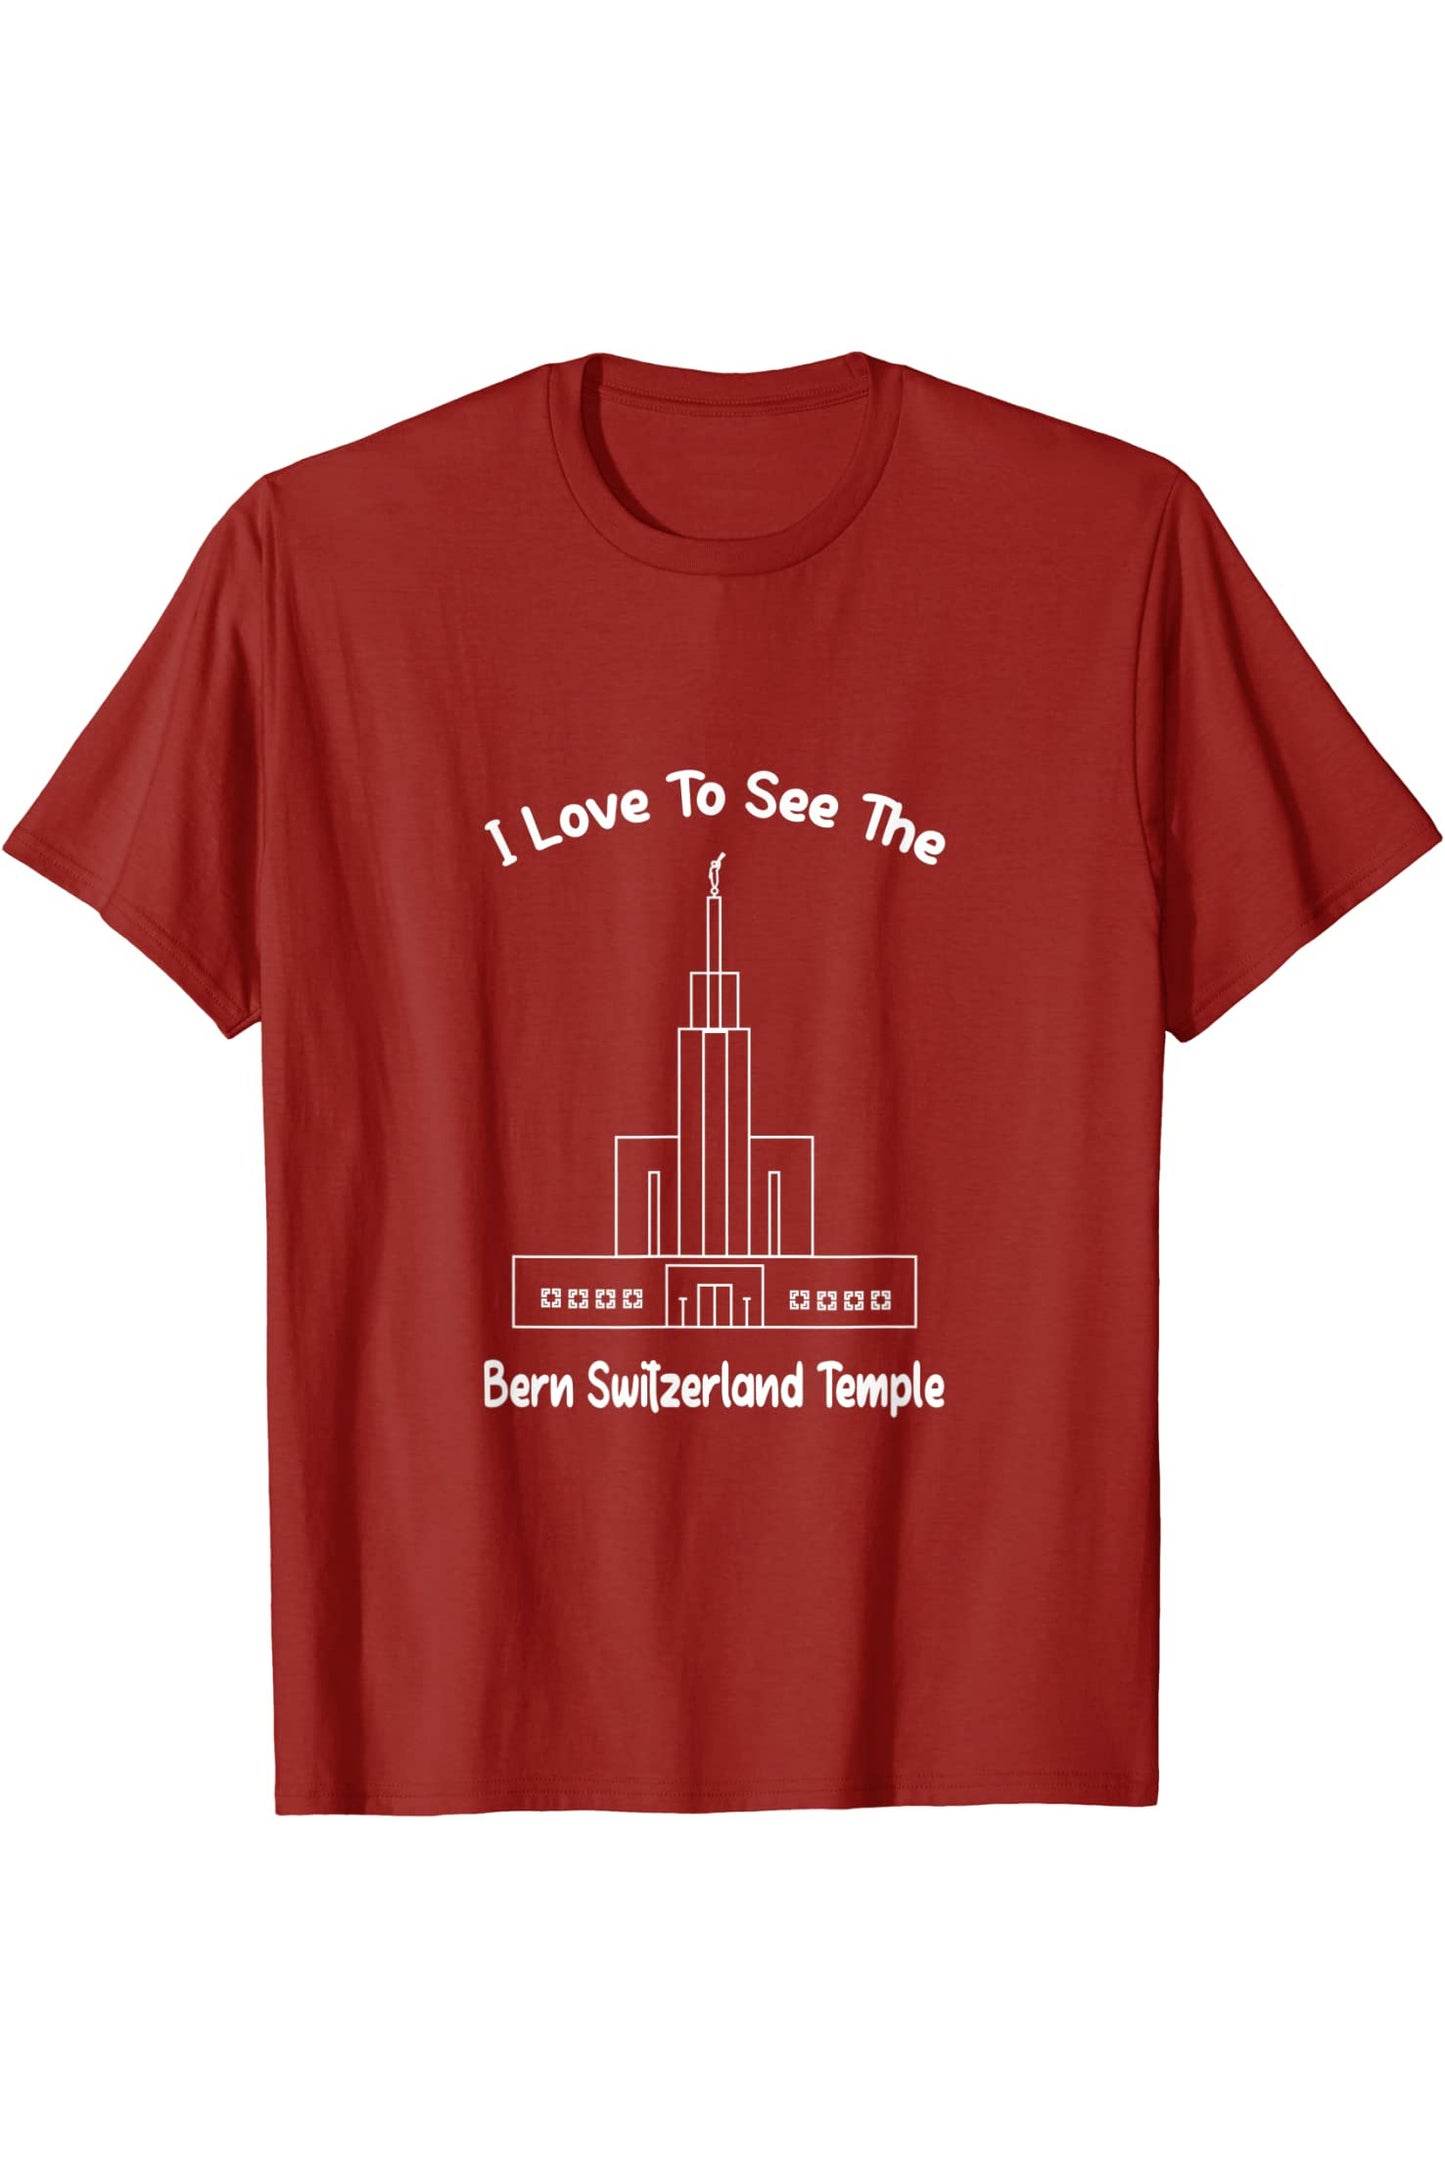 Bern Switzerland Temple T-Shirt - Primary Style (English) US